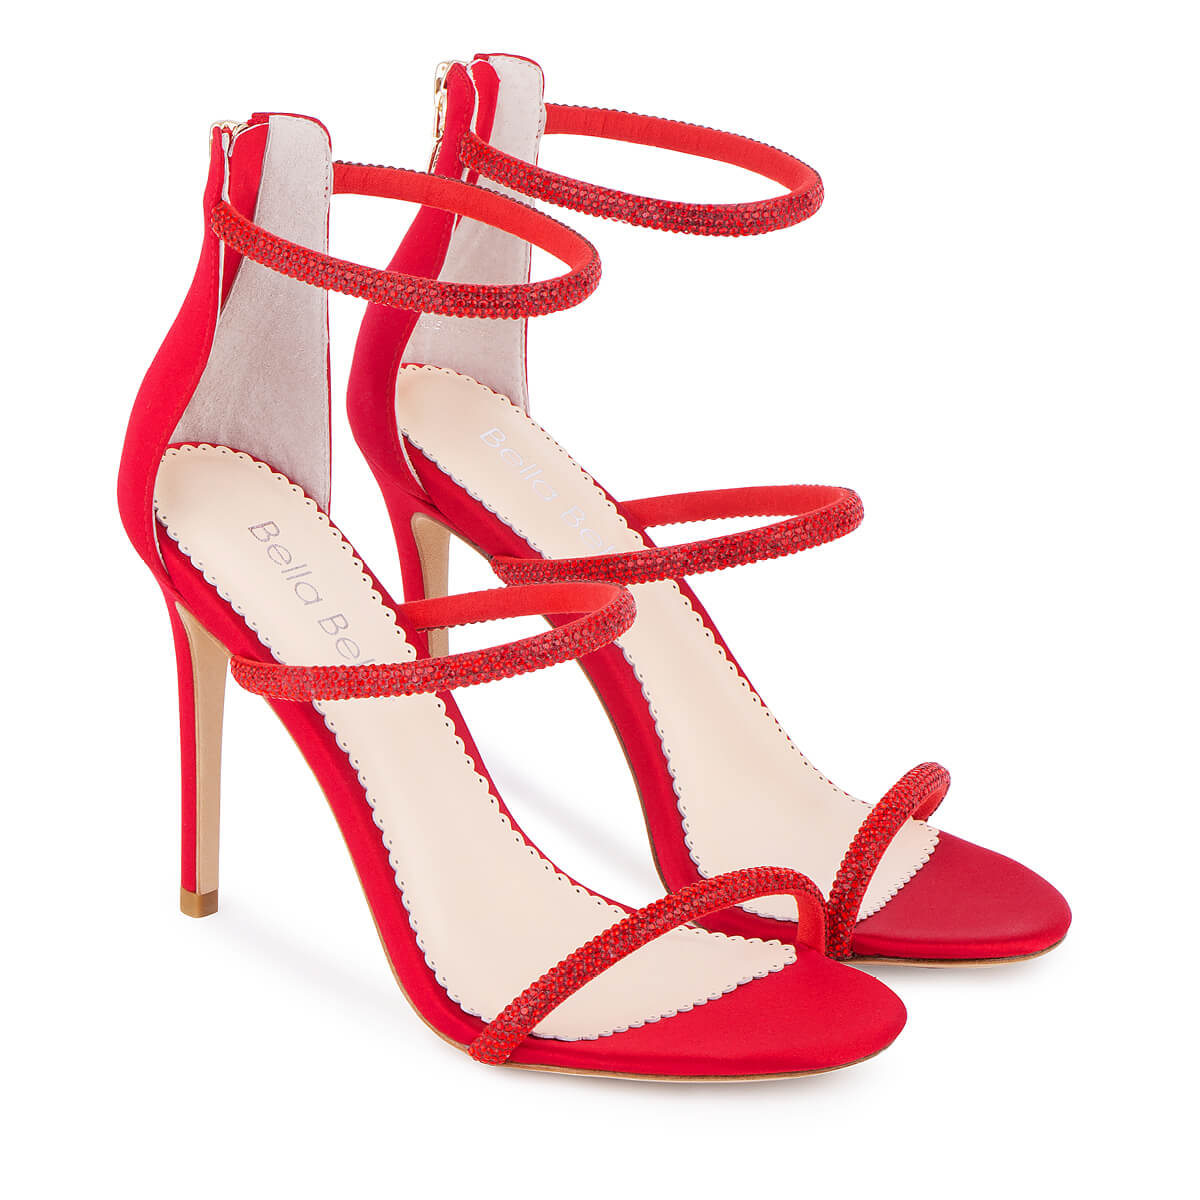 ALDO Shoes - Sparkly strappy heels? Where do we sign? Set... | Facebook